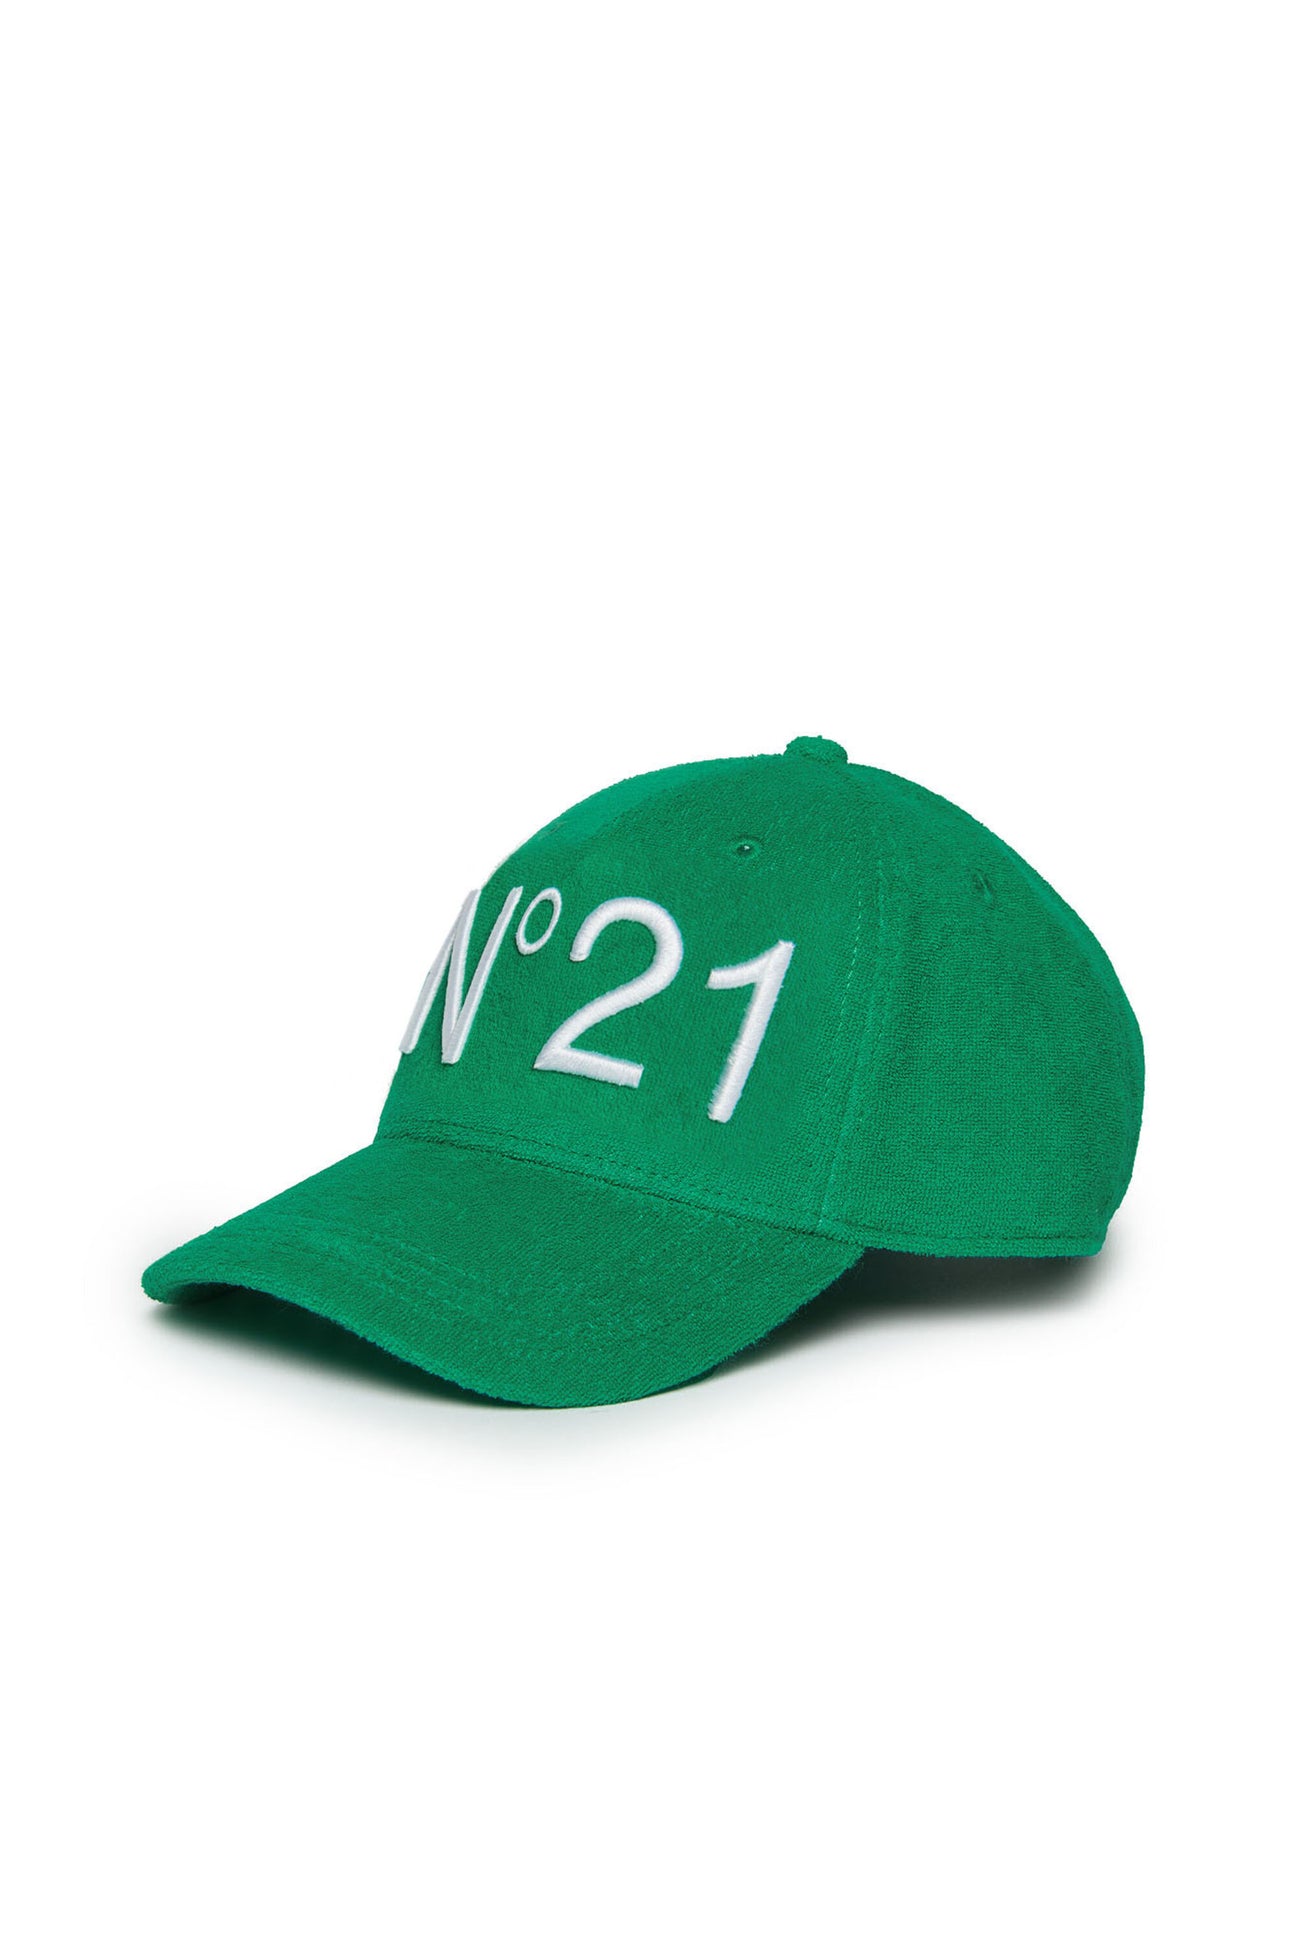 Terry baseball cap with logo 